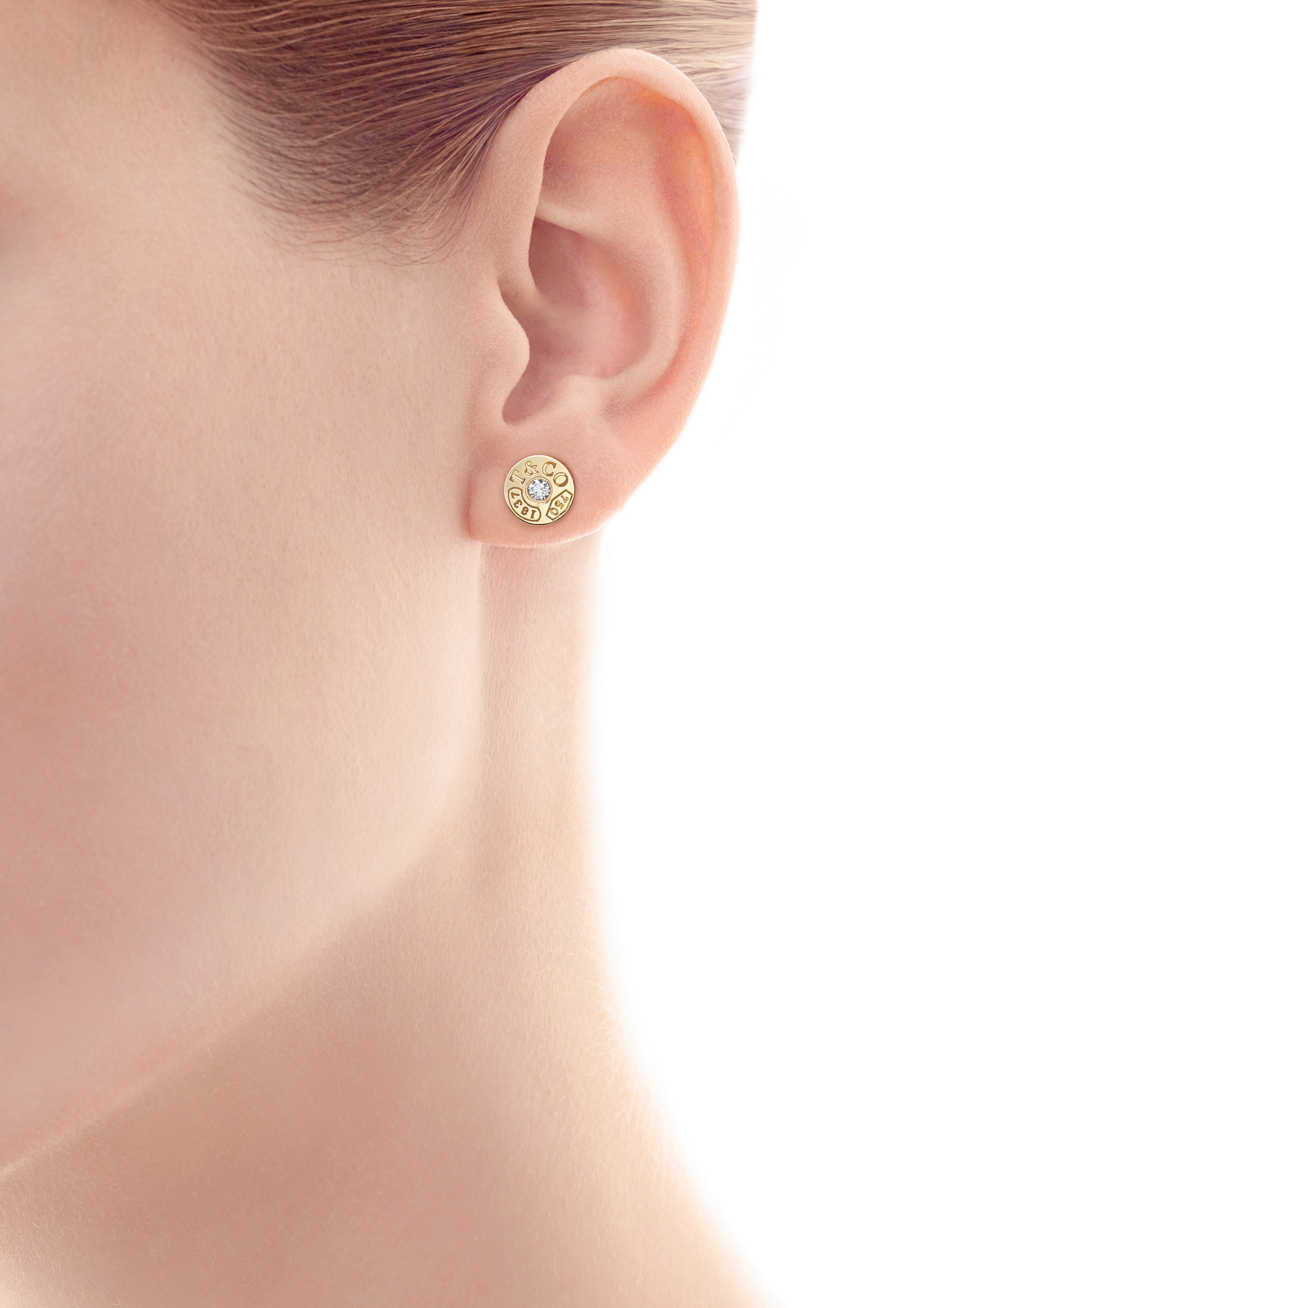 Tiffany 1837™ 系列 18K 金镶钻圈形耳环